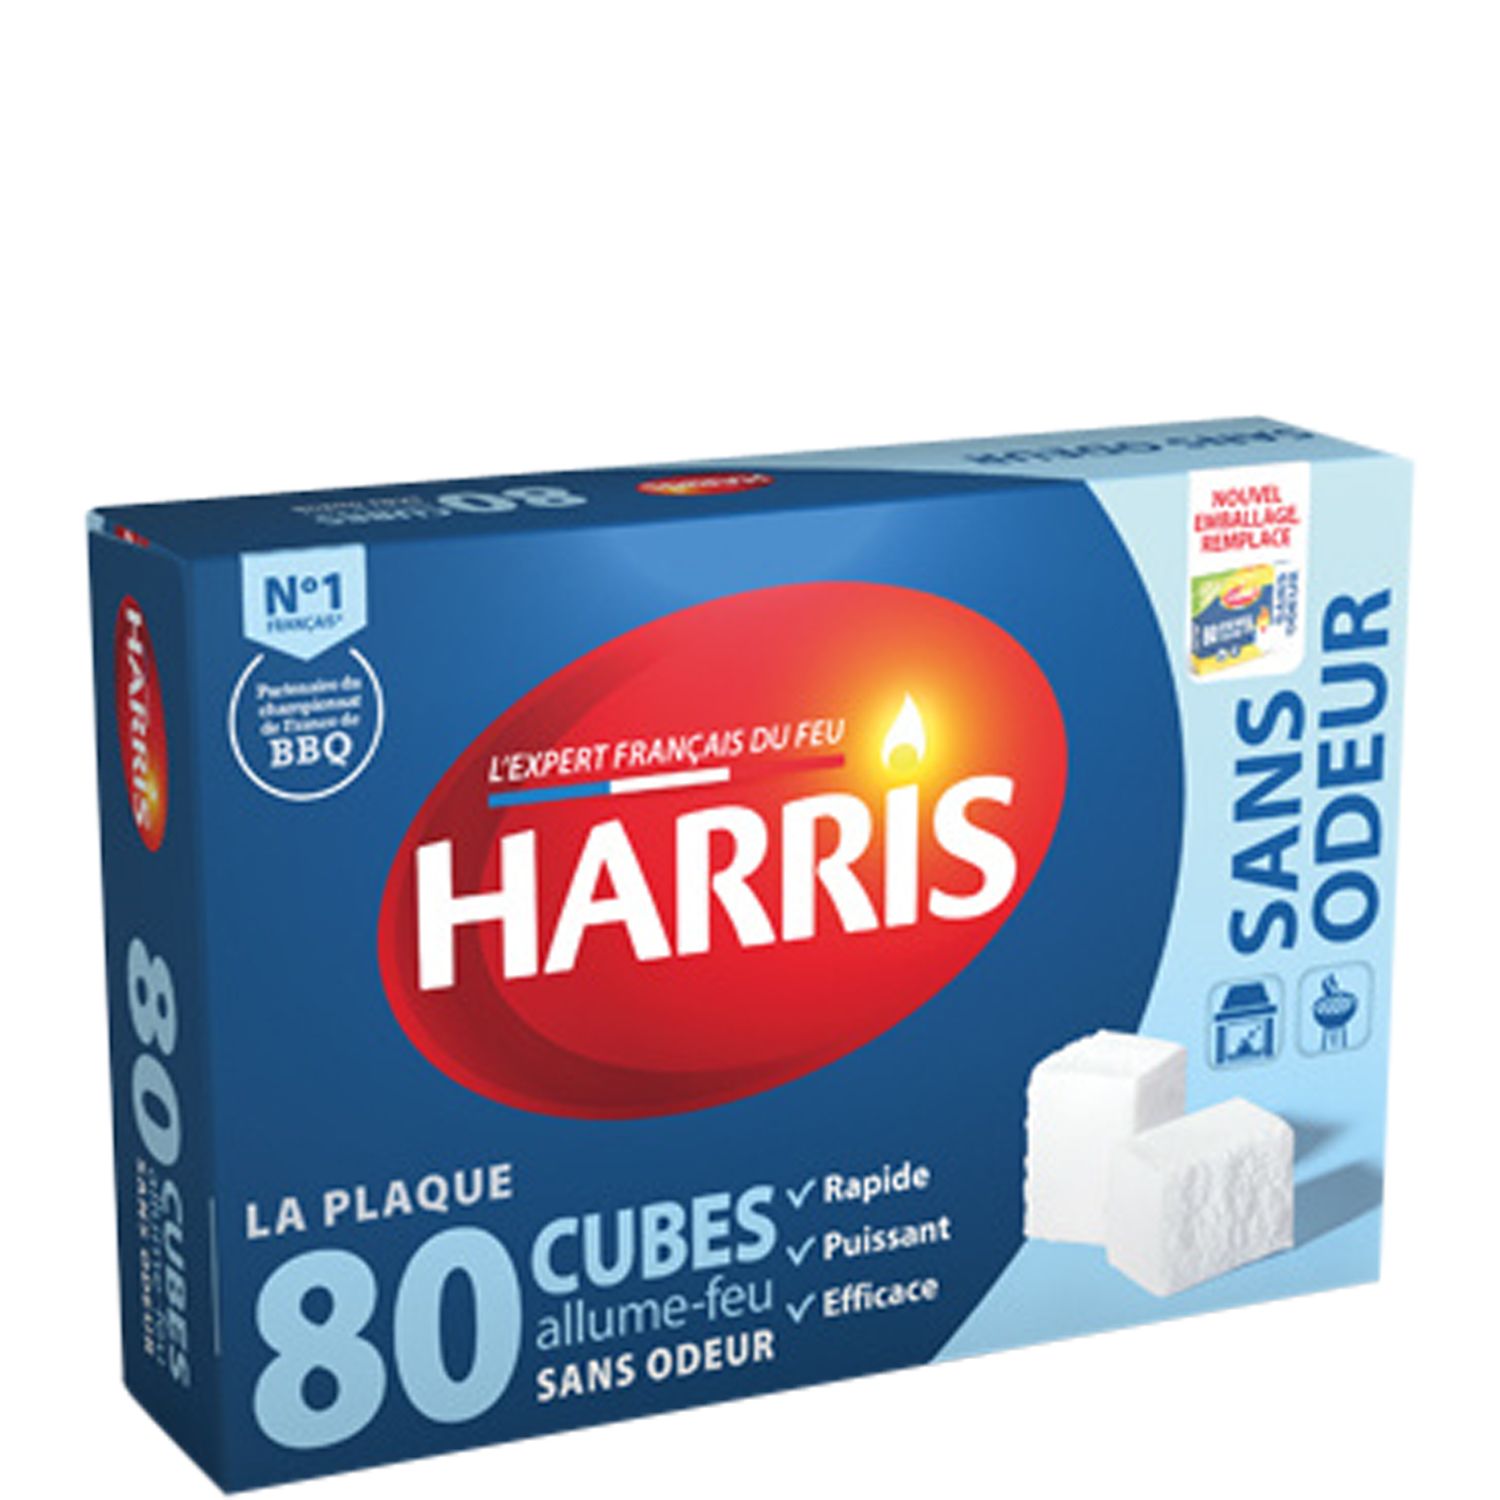 Promo Harris Allume feu sans odeur boost cubes (18) chez Bi1